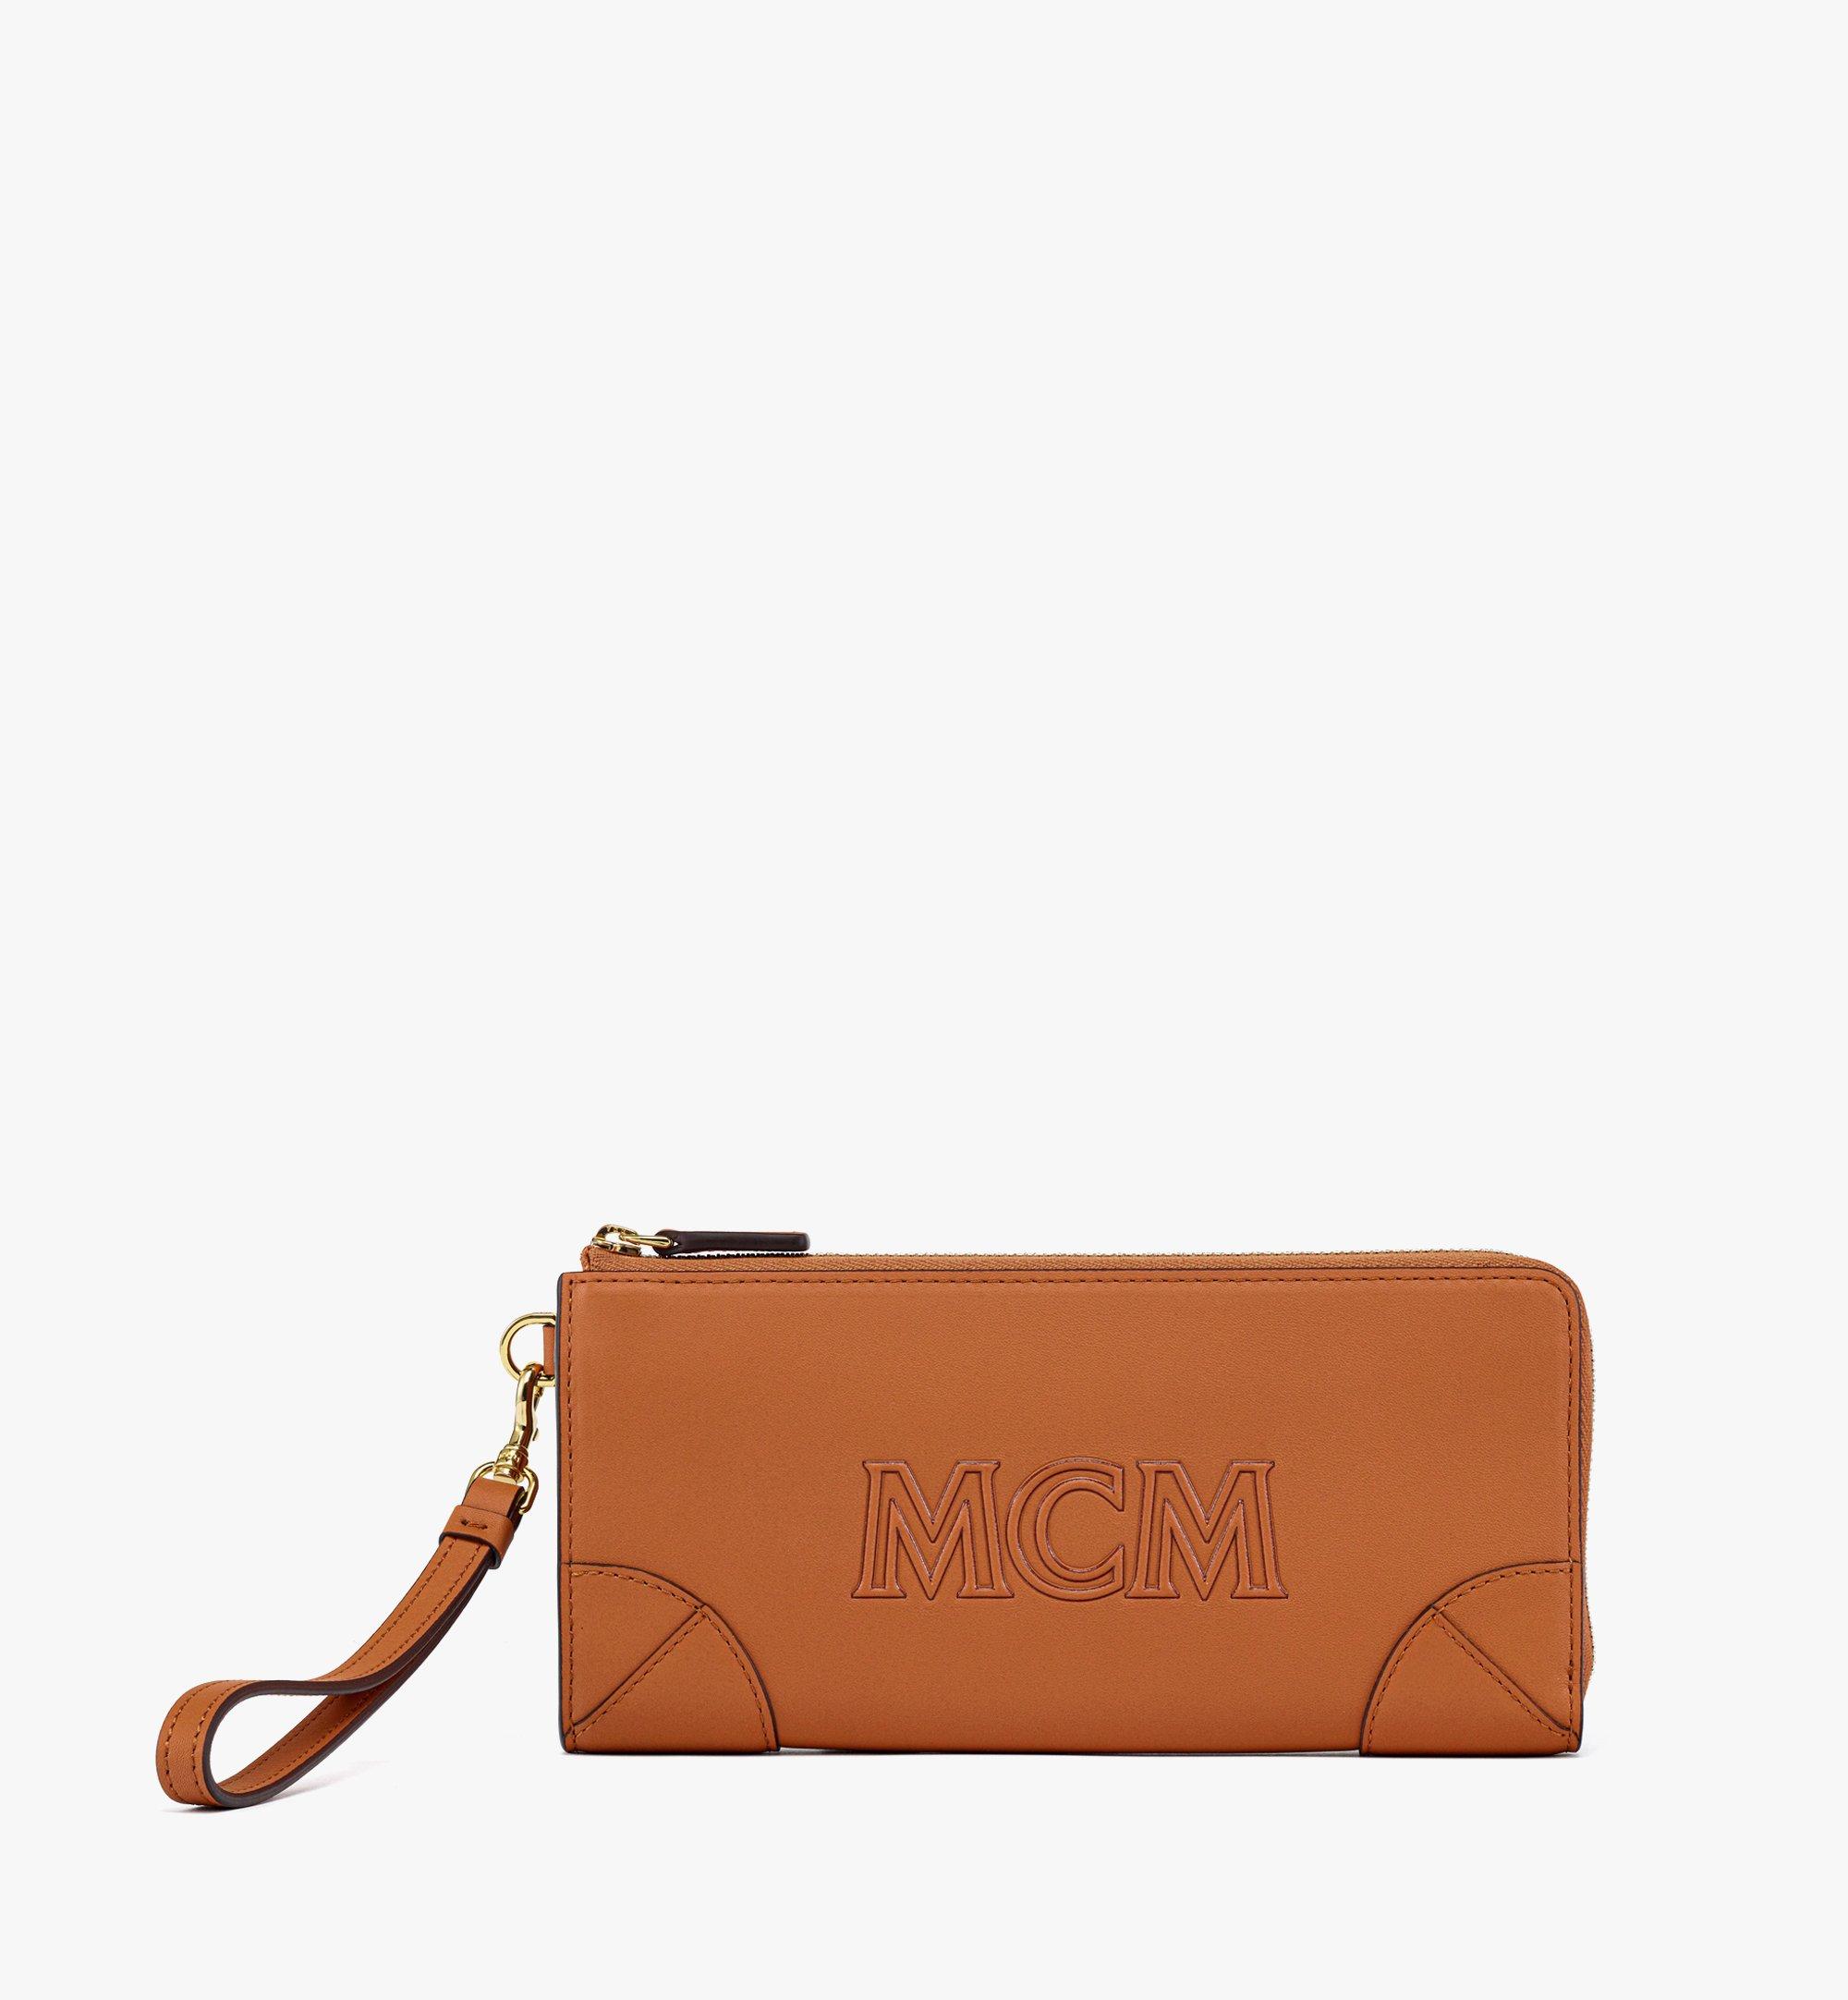 MCM Aren Zip Around Wallet in Spanish Calf Leather Cognac MYLDATA04CO001 Alternate View 1